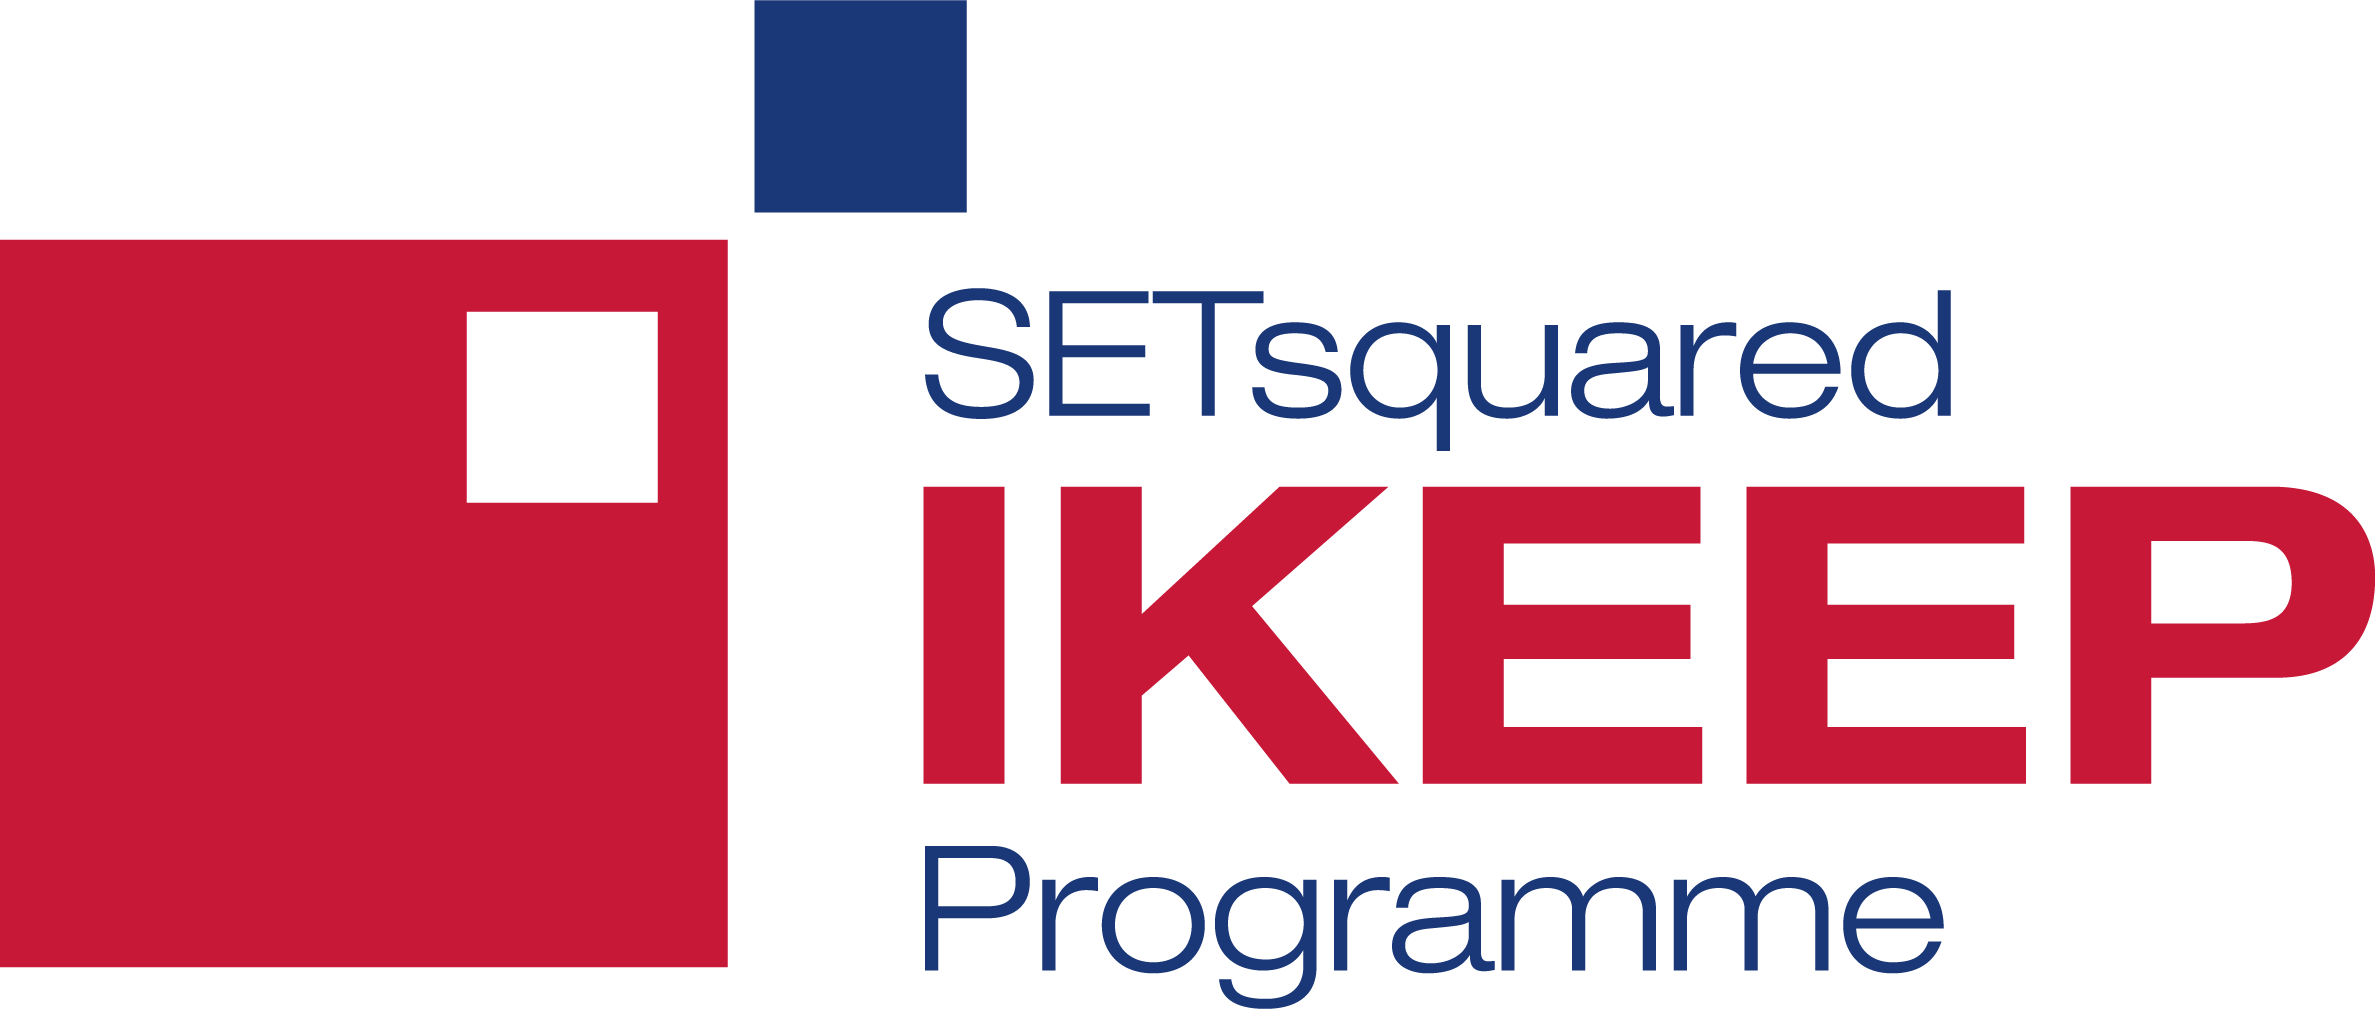 IKEEP Logo.png